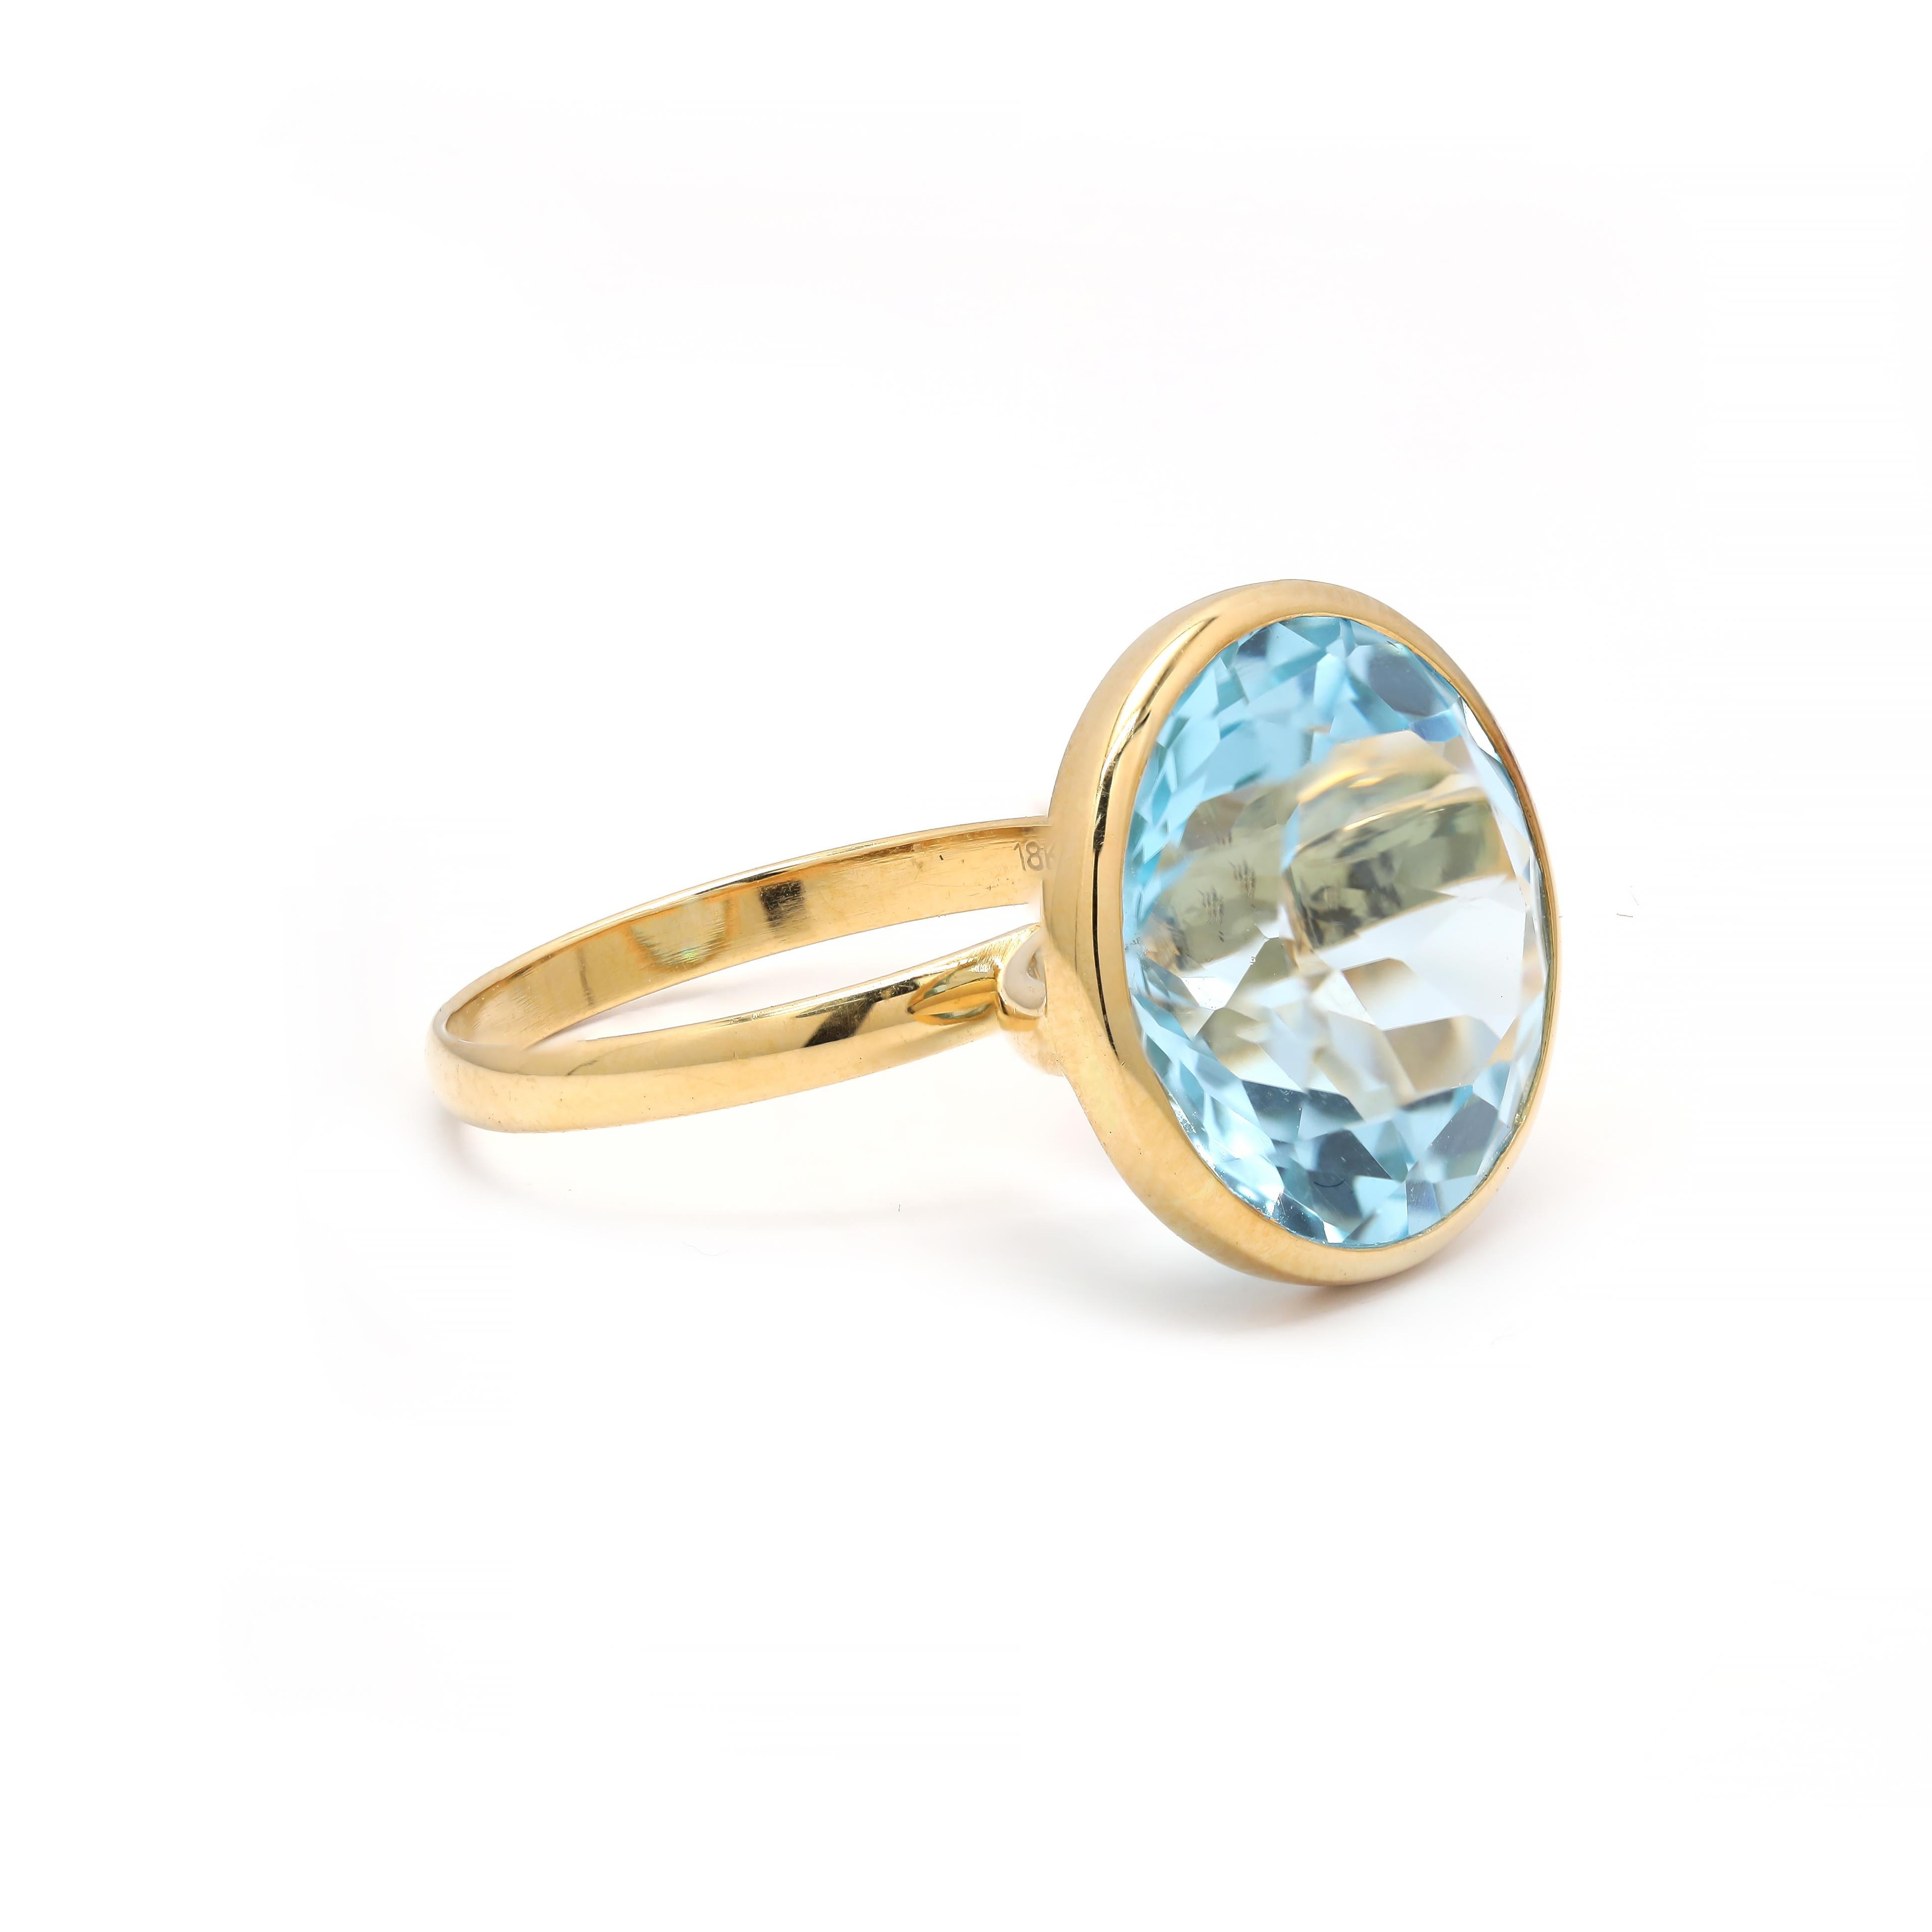 For Sale:  4 Carat Bezel Set Aquamarine Gemstone Ring in 18K Solid Yellow Gold 4